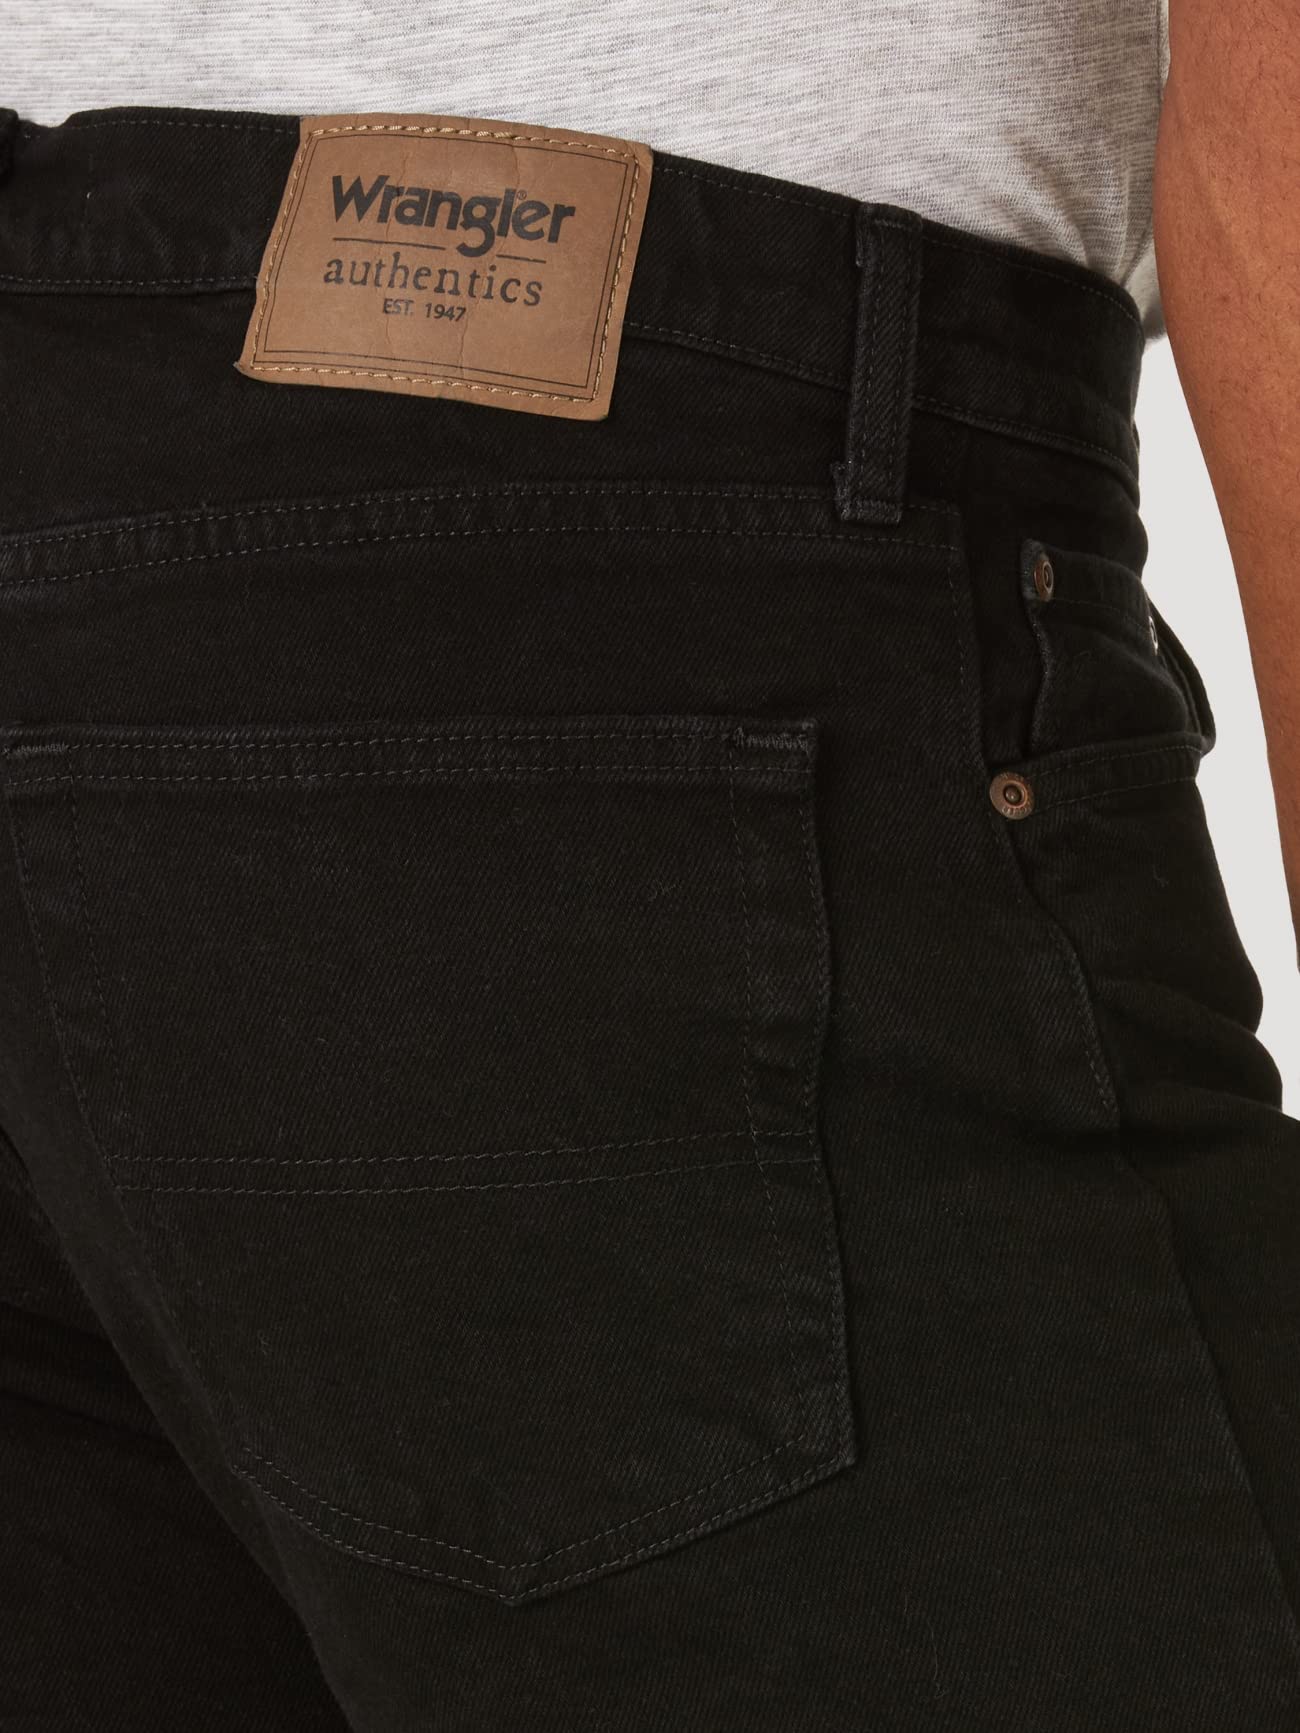 Wrangler Authentics Men's Classic Relaxed Fit Five Pocket Jean Short, Jet Black, 34